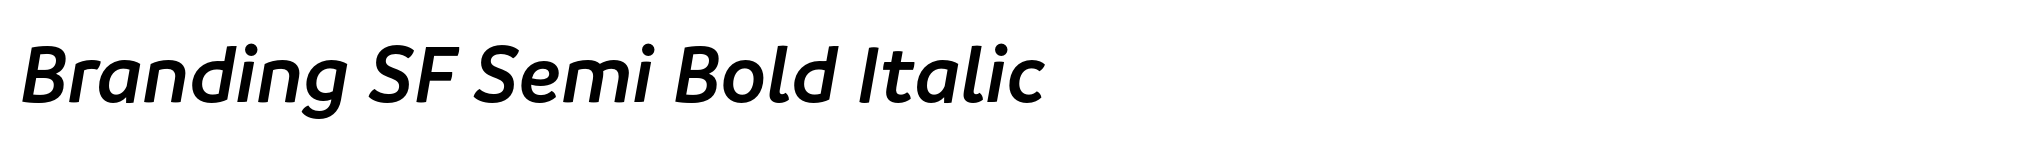 Branding SF Semi Bold Italic image